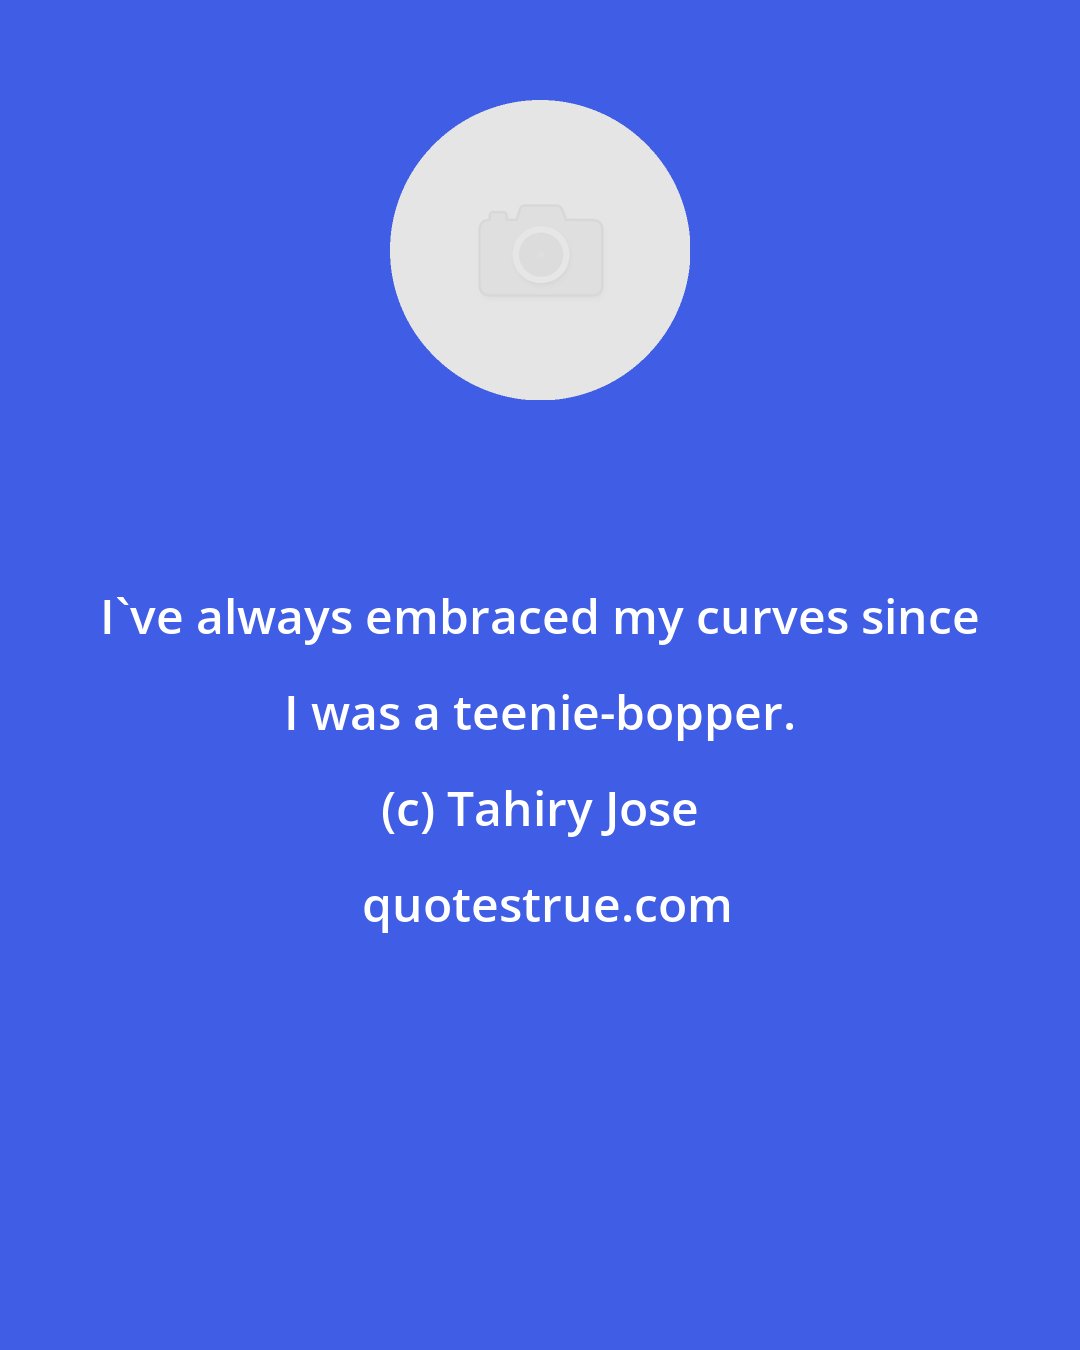 Tahiry Jose: I've always embraced my curves since I was a teenie-bopper.